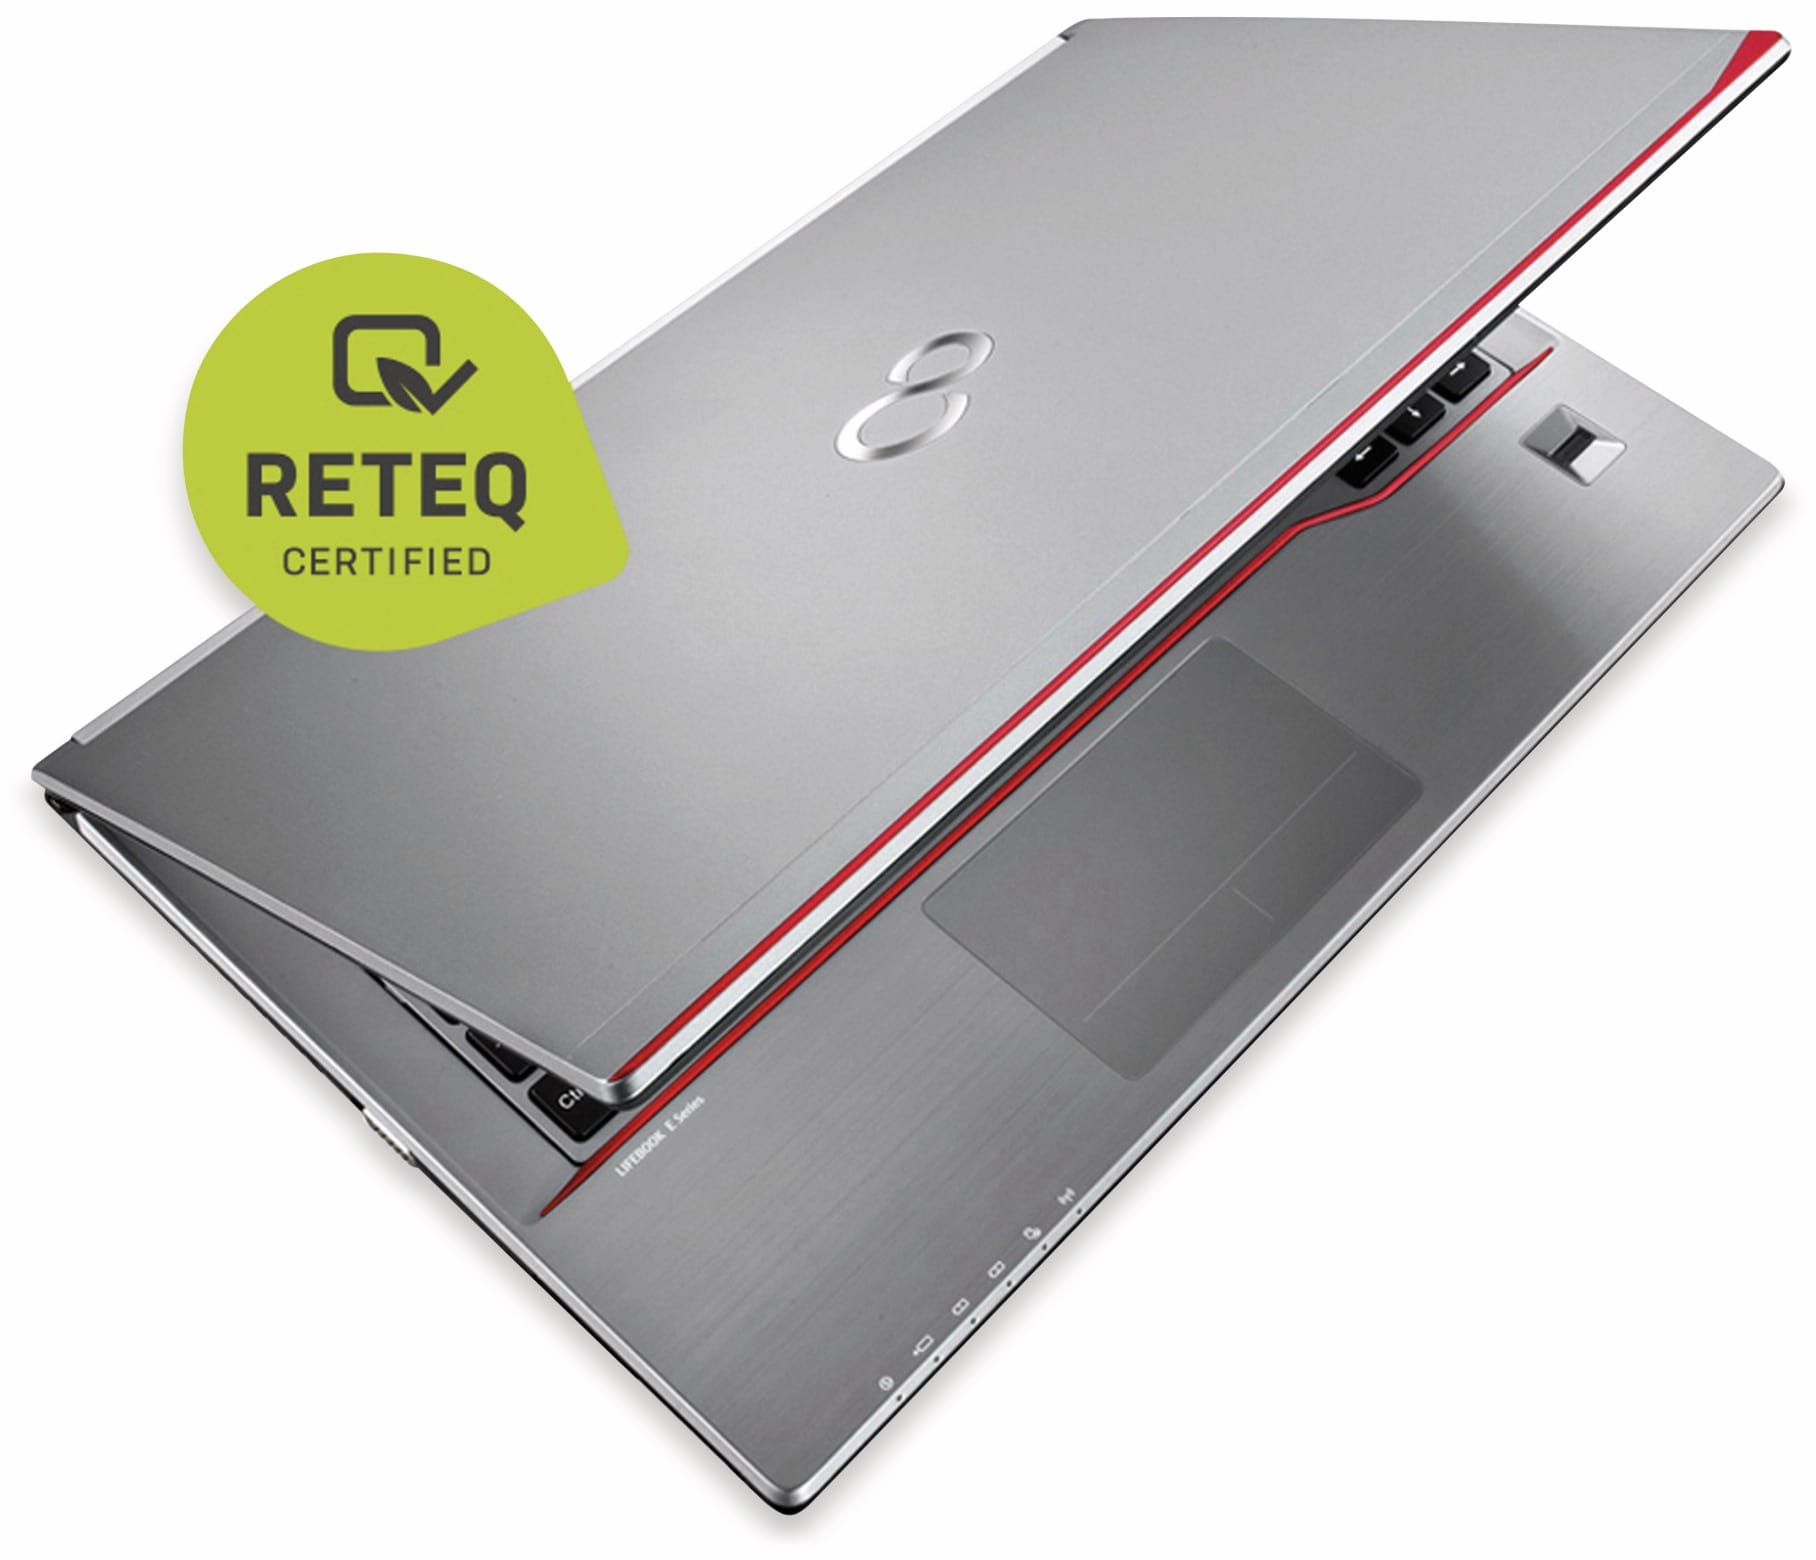 FUJITSU Notebook Lifebook E736, 13,3", Intel i5, 8GB RAM, Win10P, Refurbished